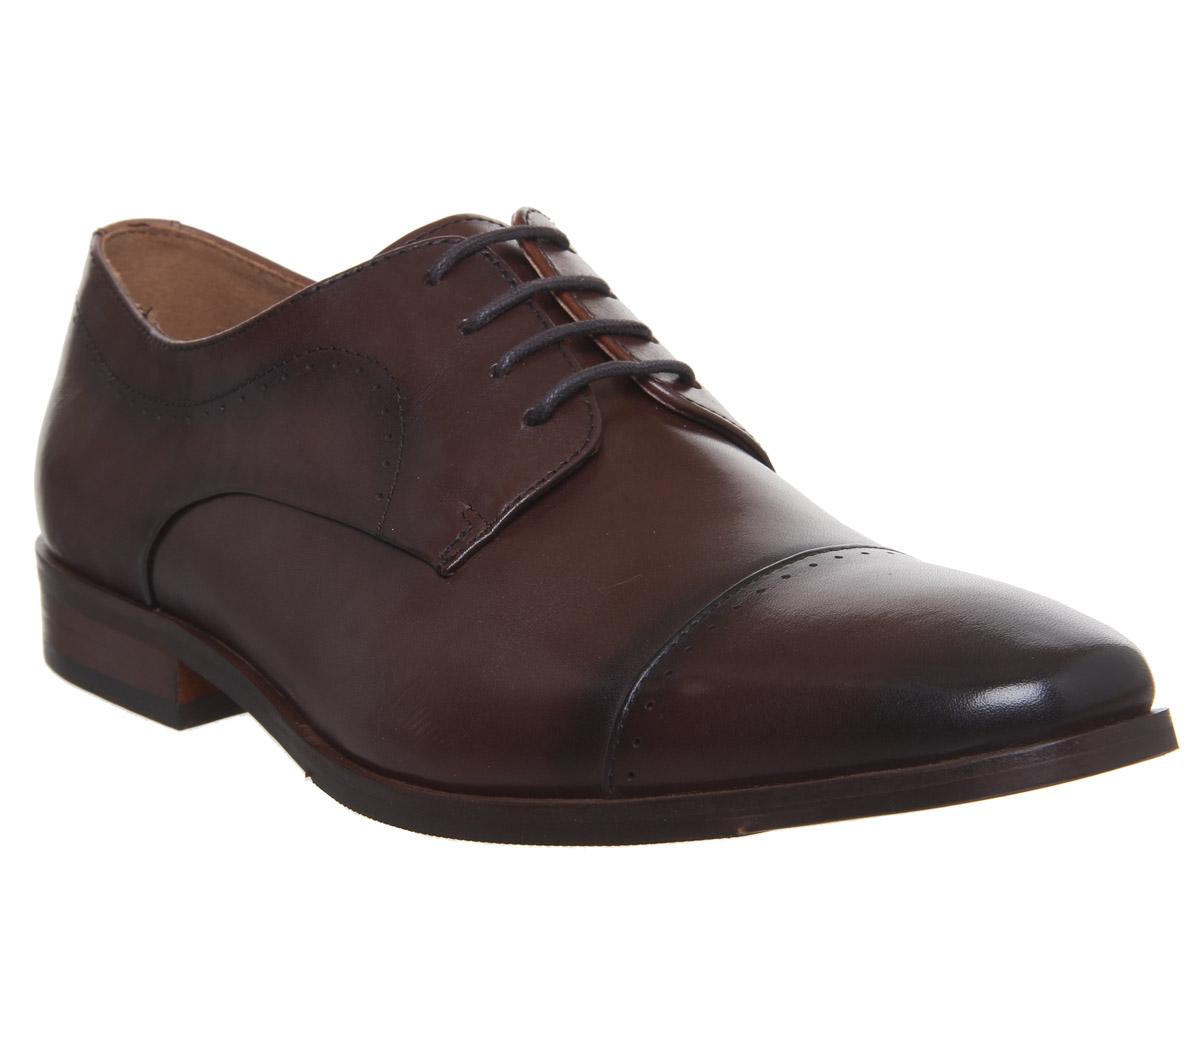 Office Look Toe Cap Shoes Brown Leather - Men’s Smart Shoes